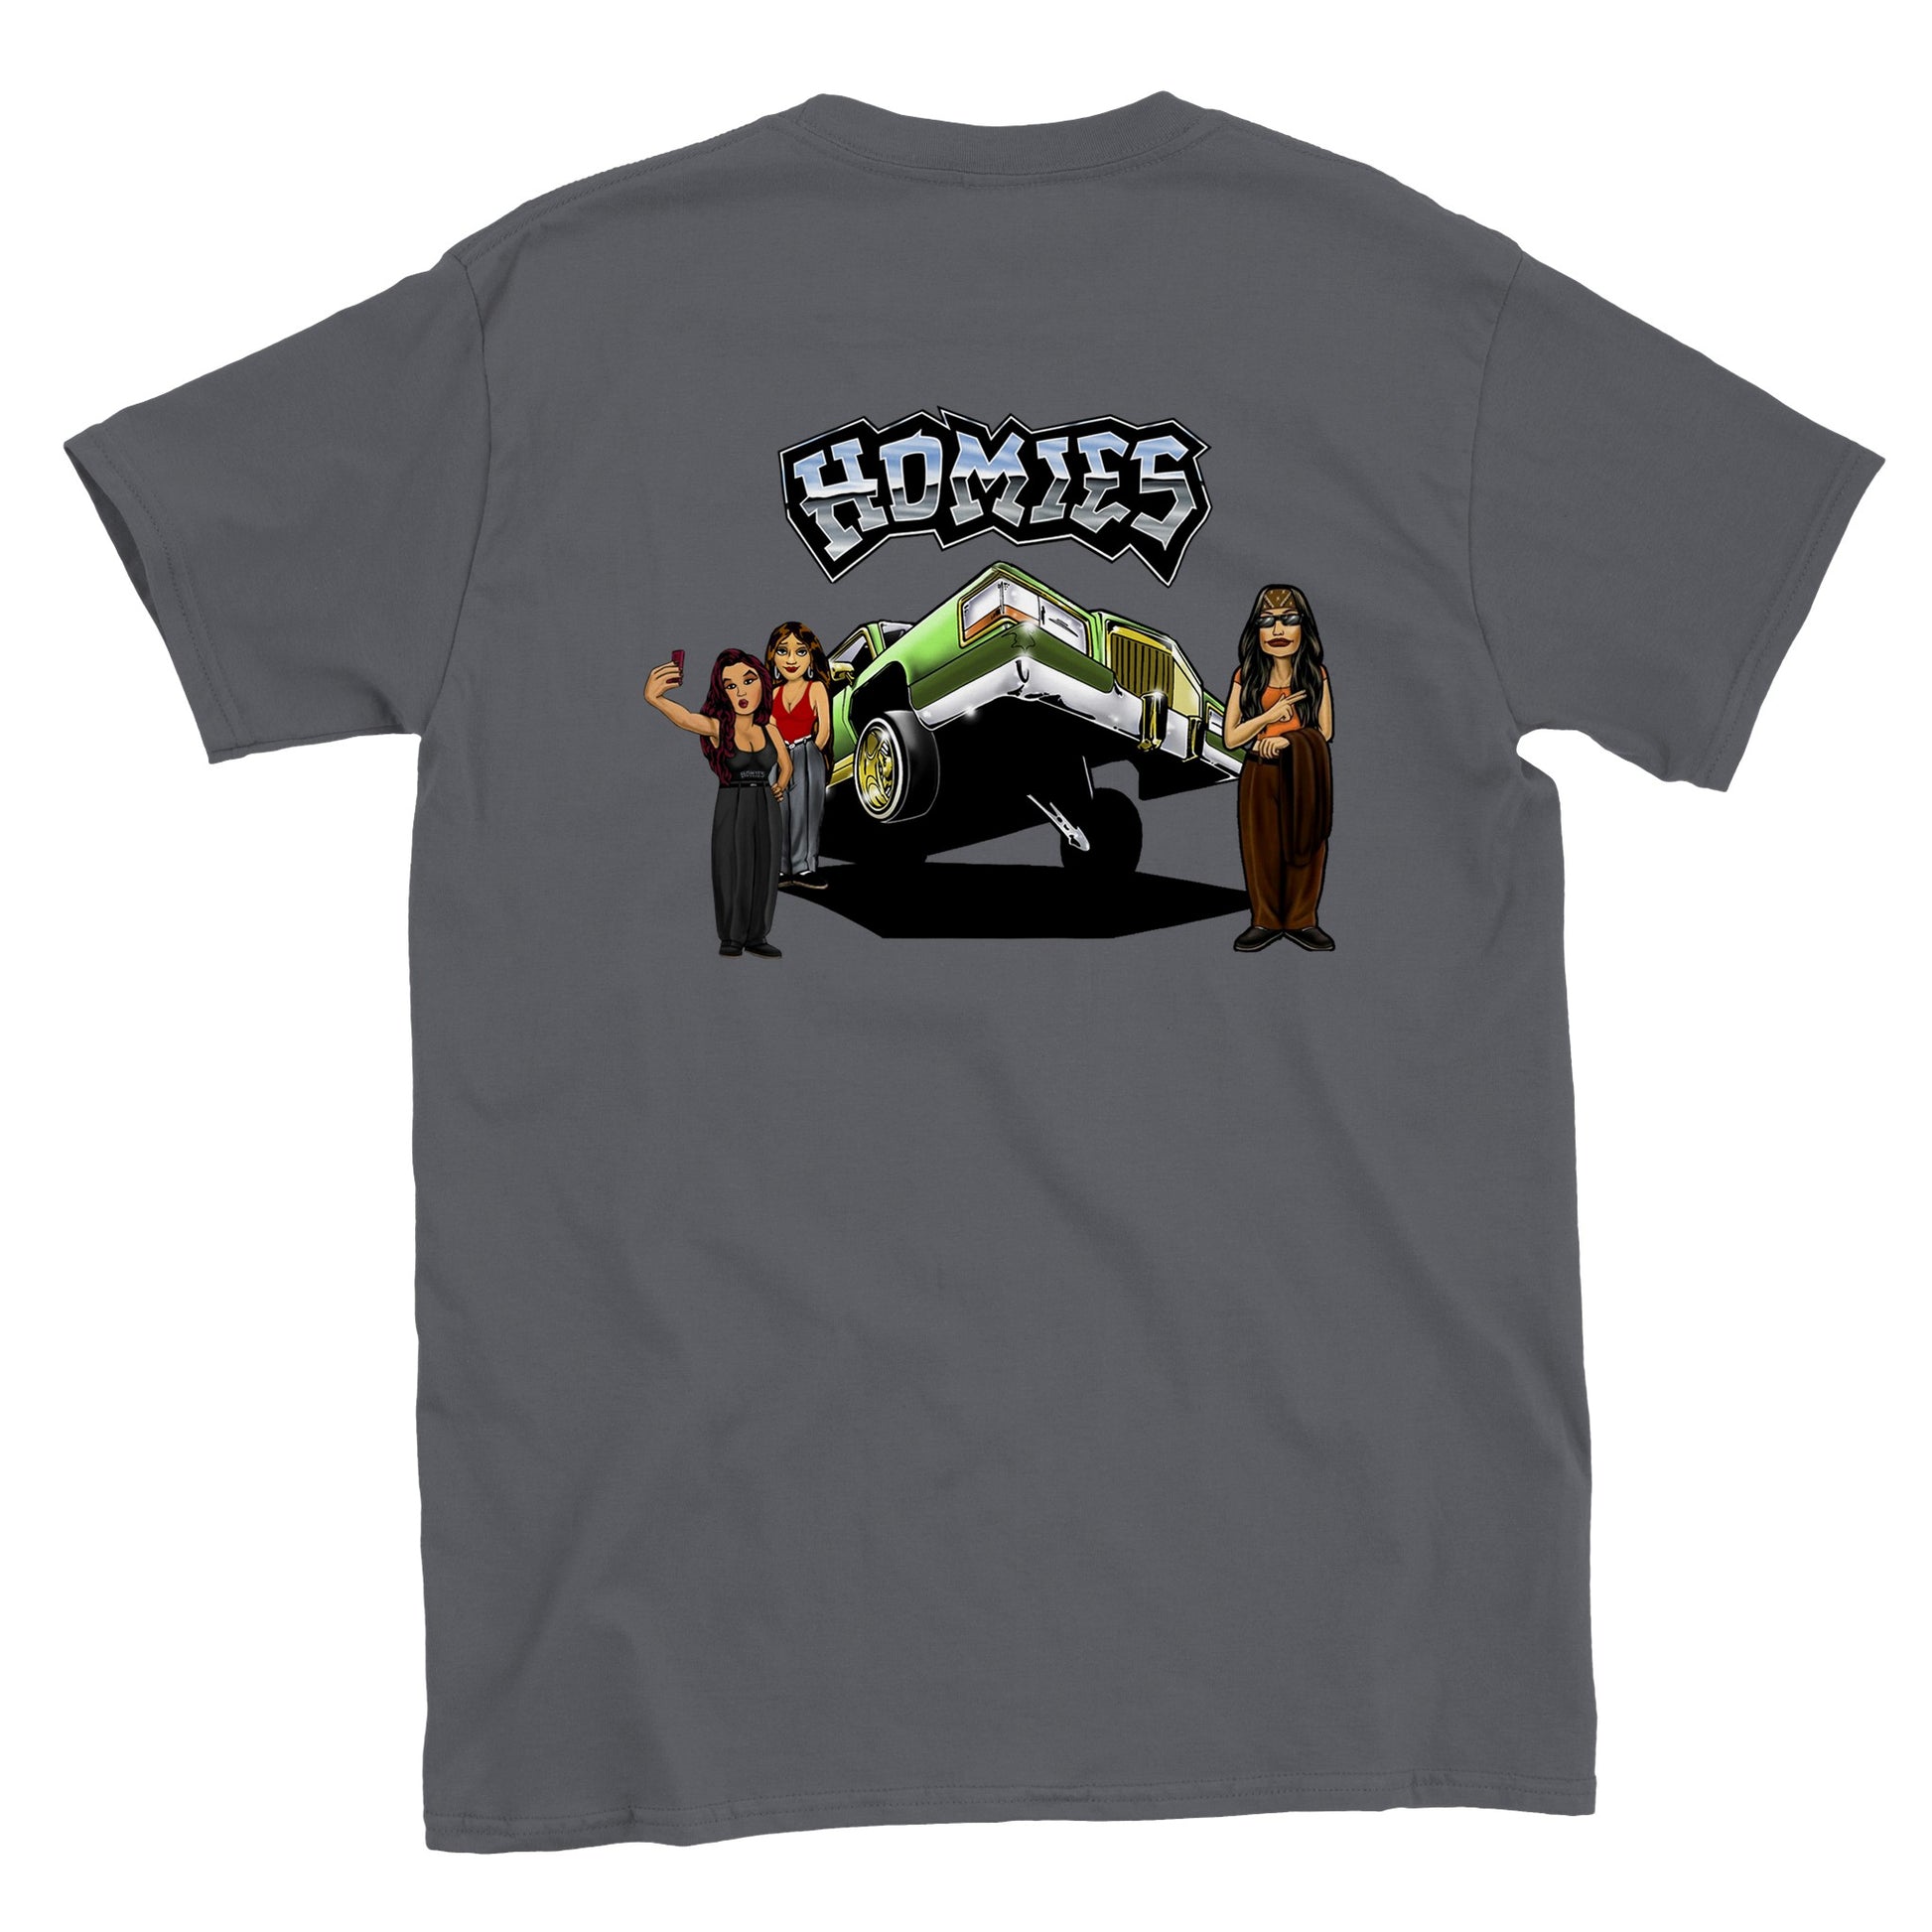 Homies - Lowrider T-Shirt - Mister Snarky's